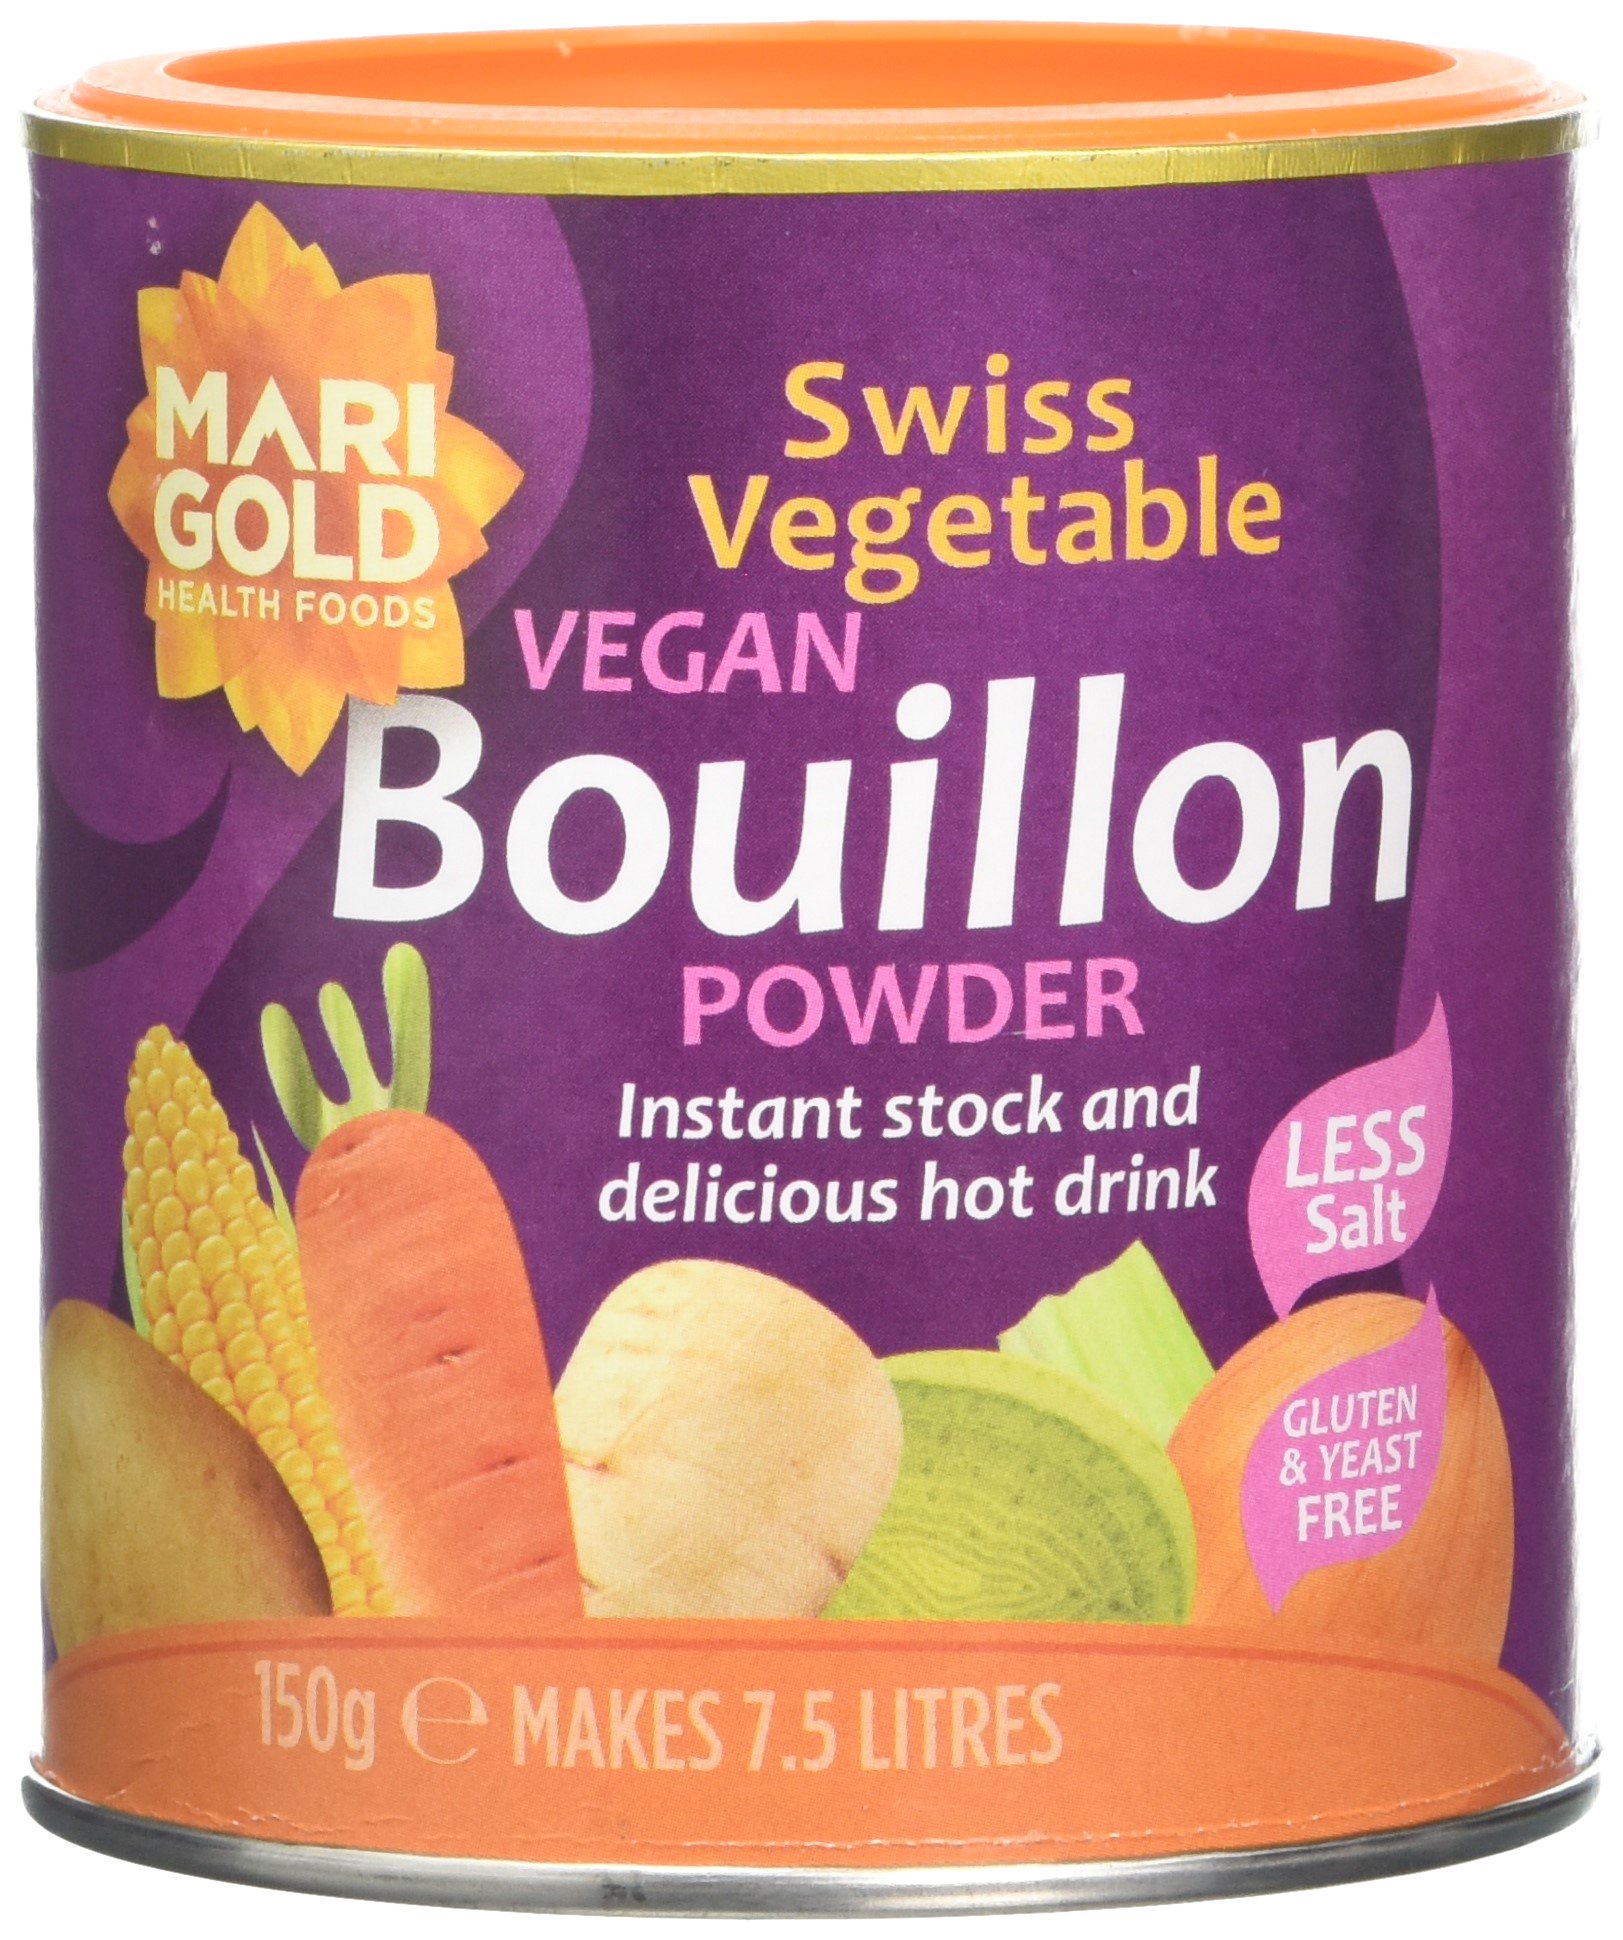 Marigold Swiss Vegetable Vegan Bouillon Powder Reduced Salt